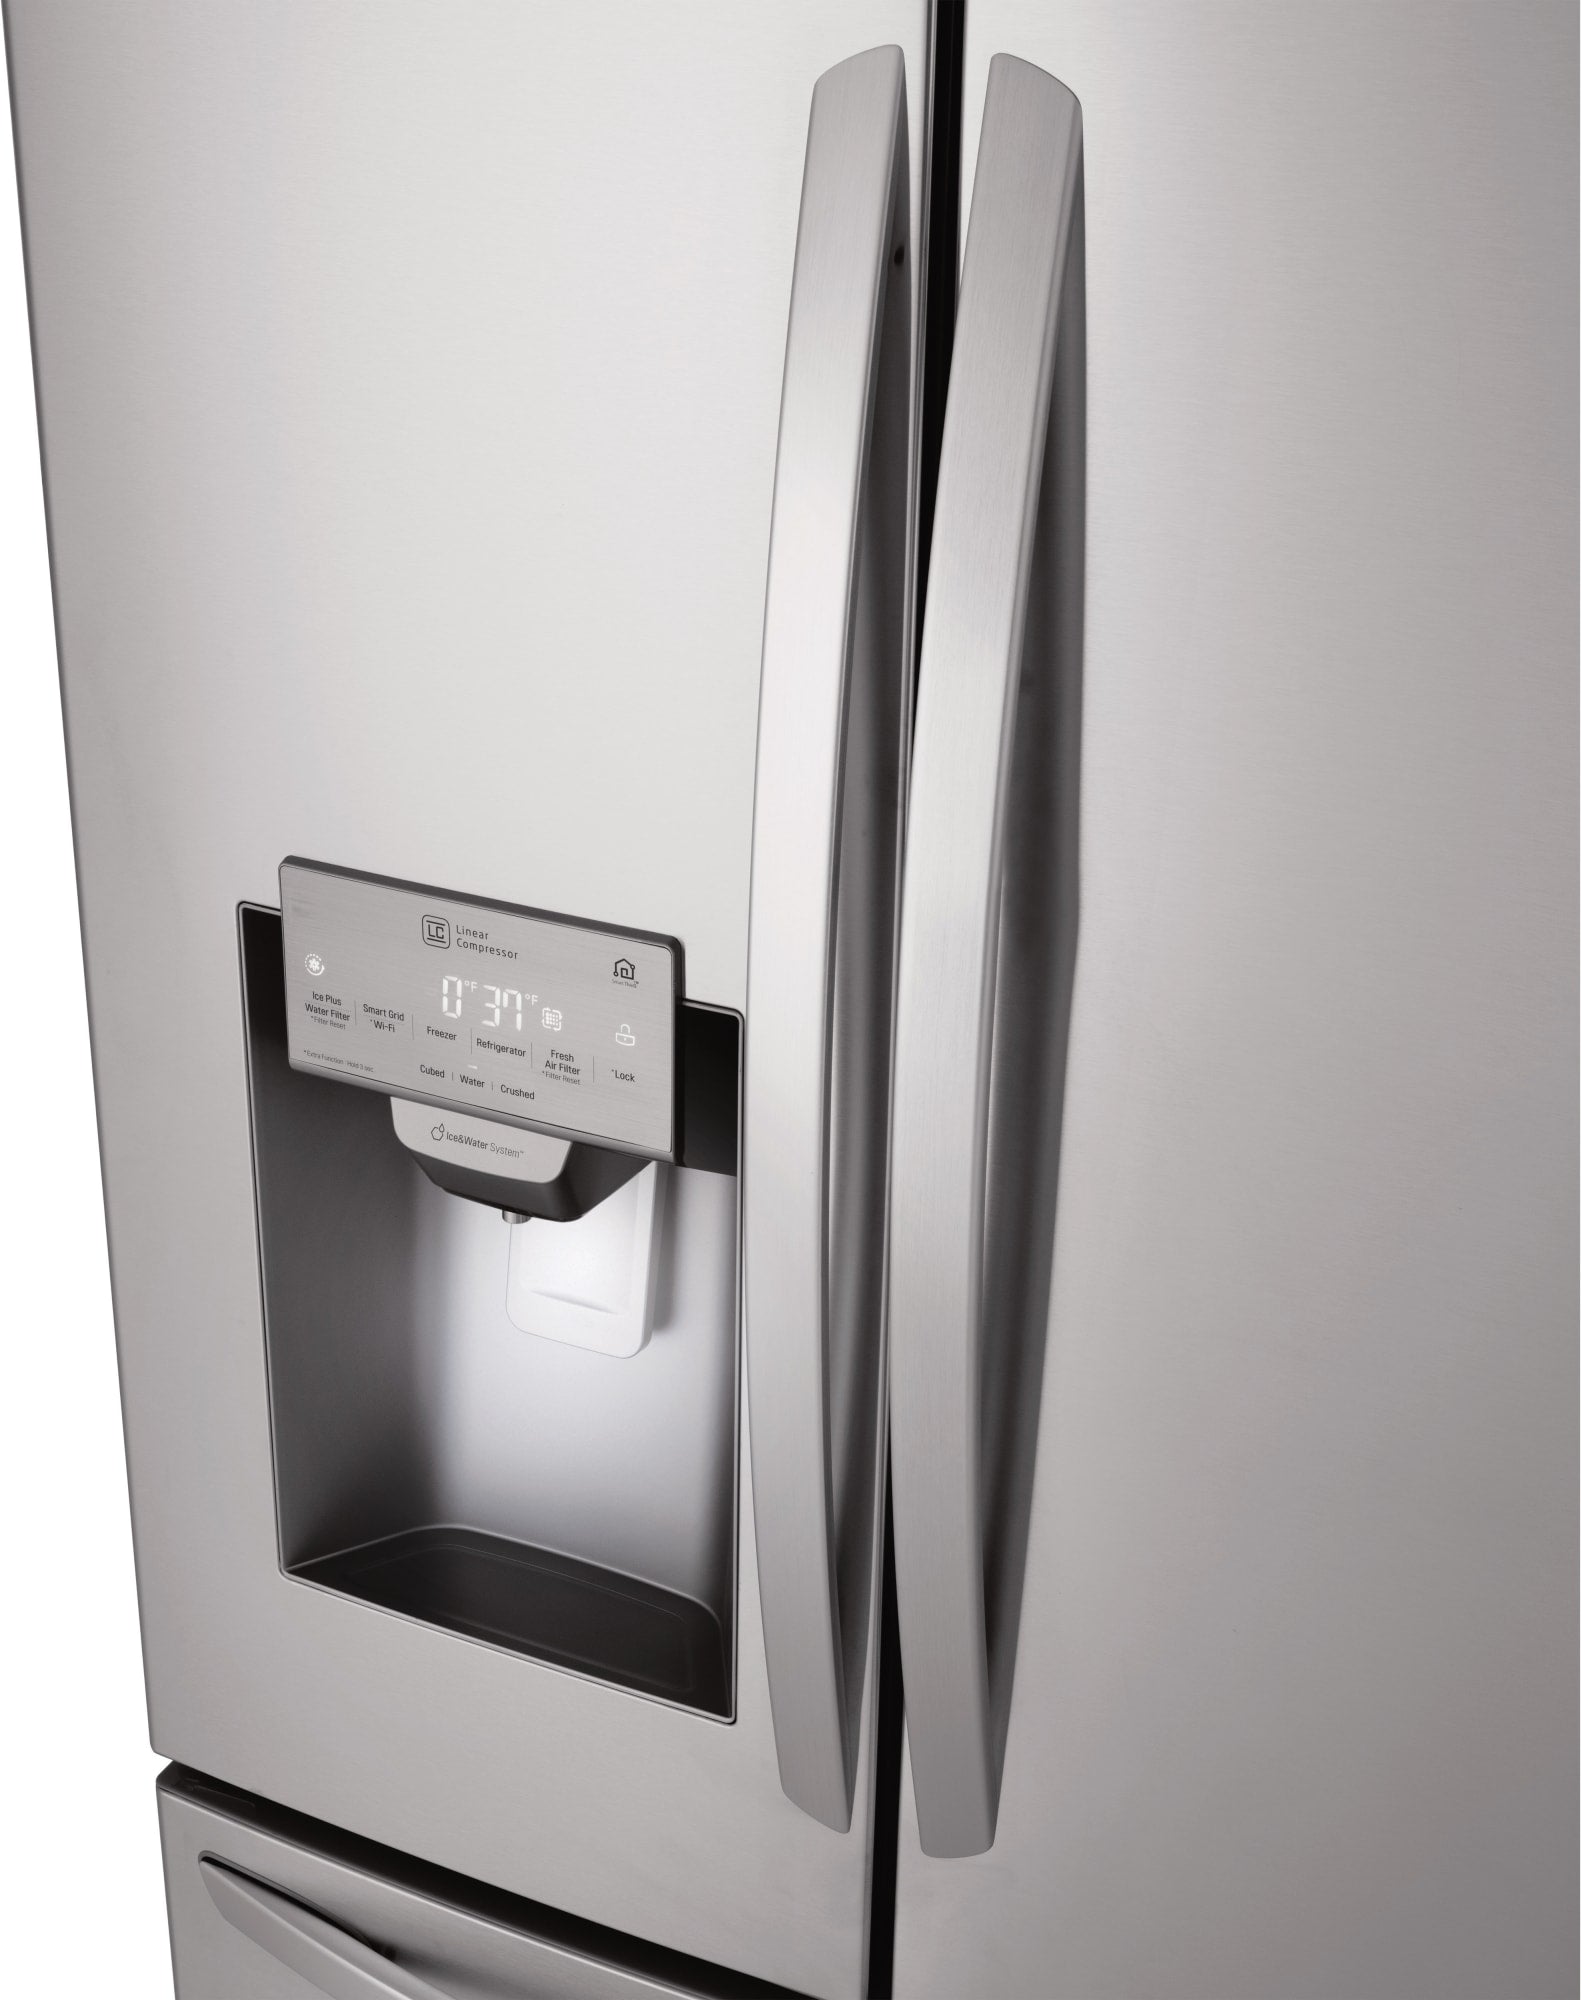 ULine Marine Refrigerator & Ice Maker, 115V - 3.2 cu.ft - 21, White